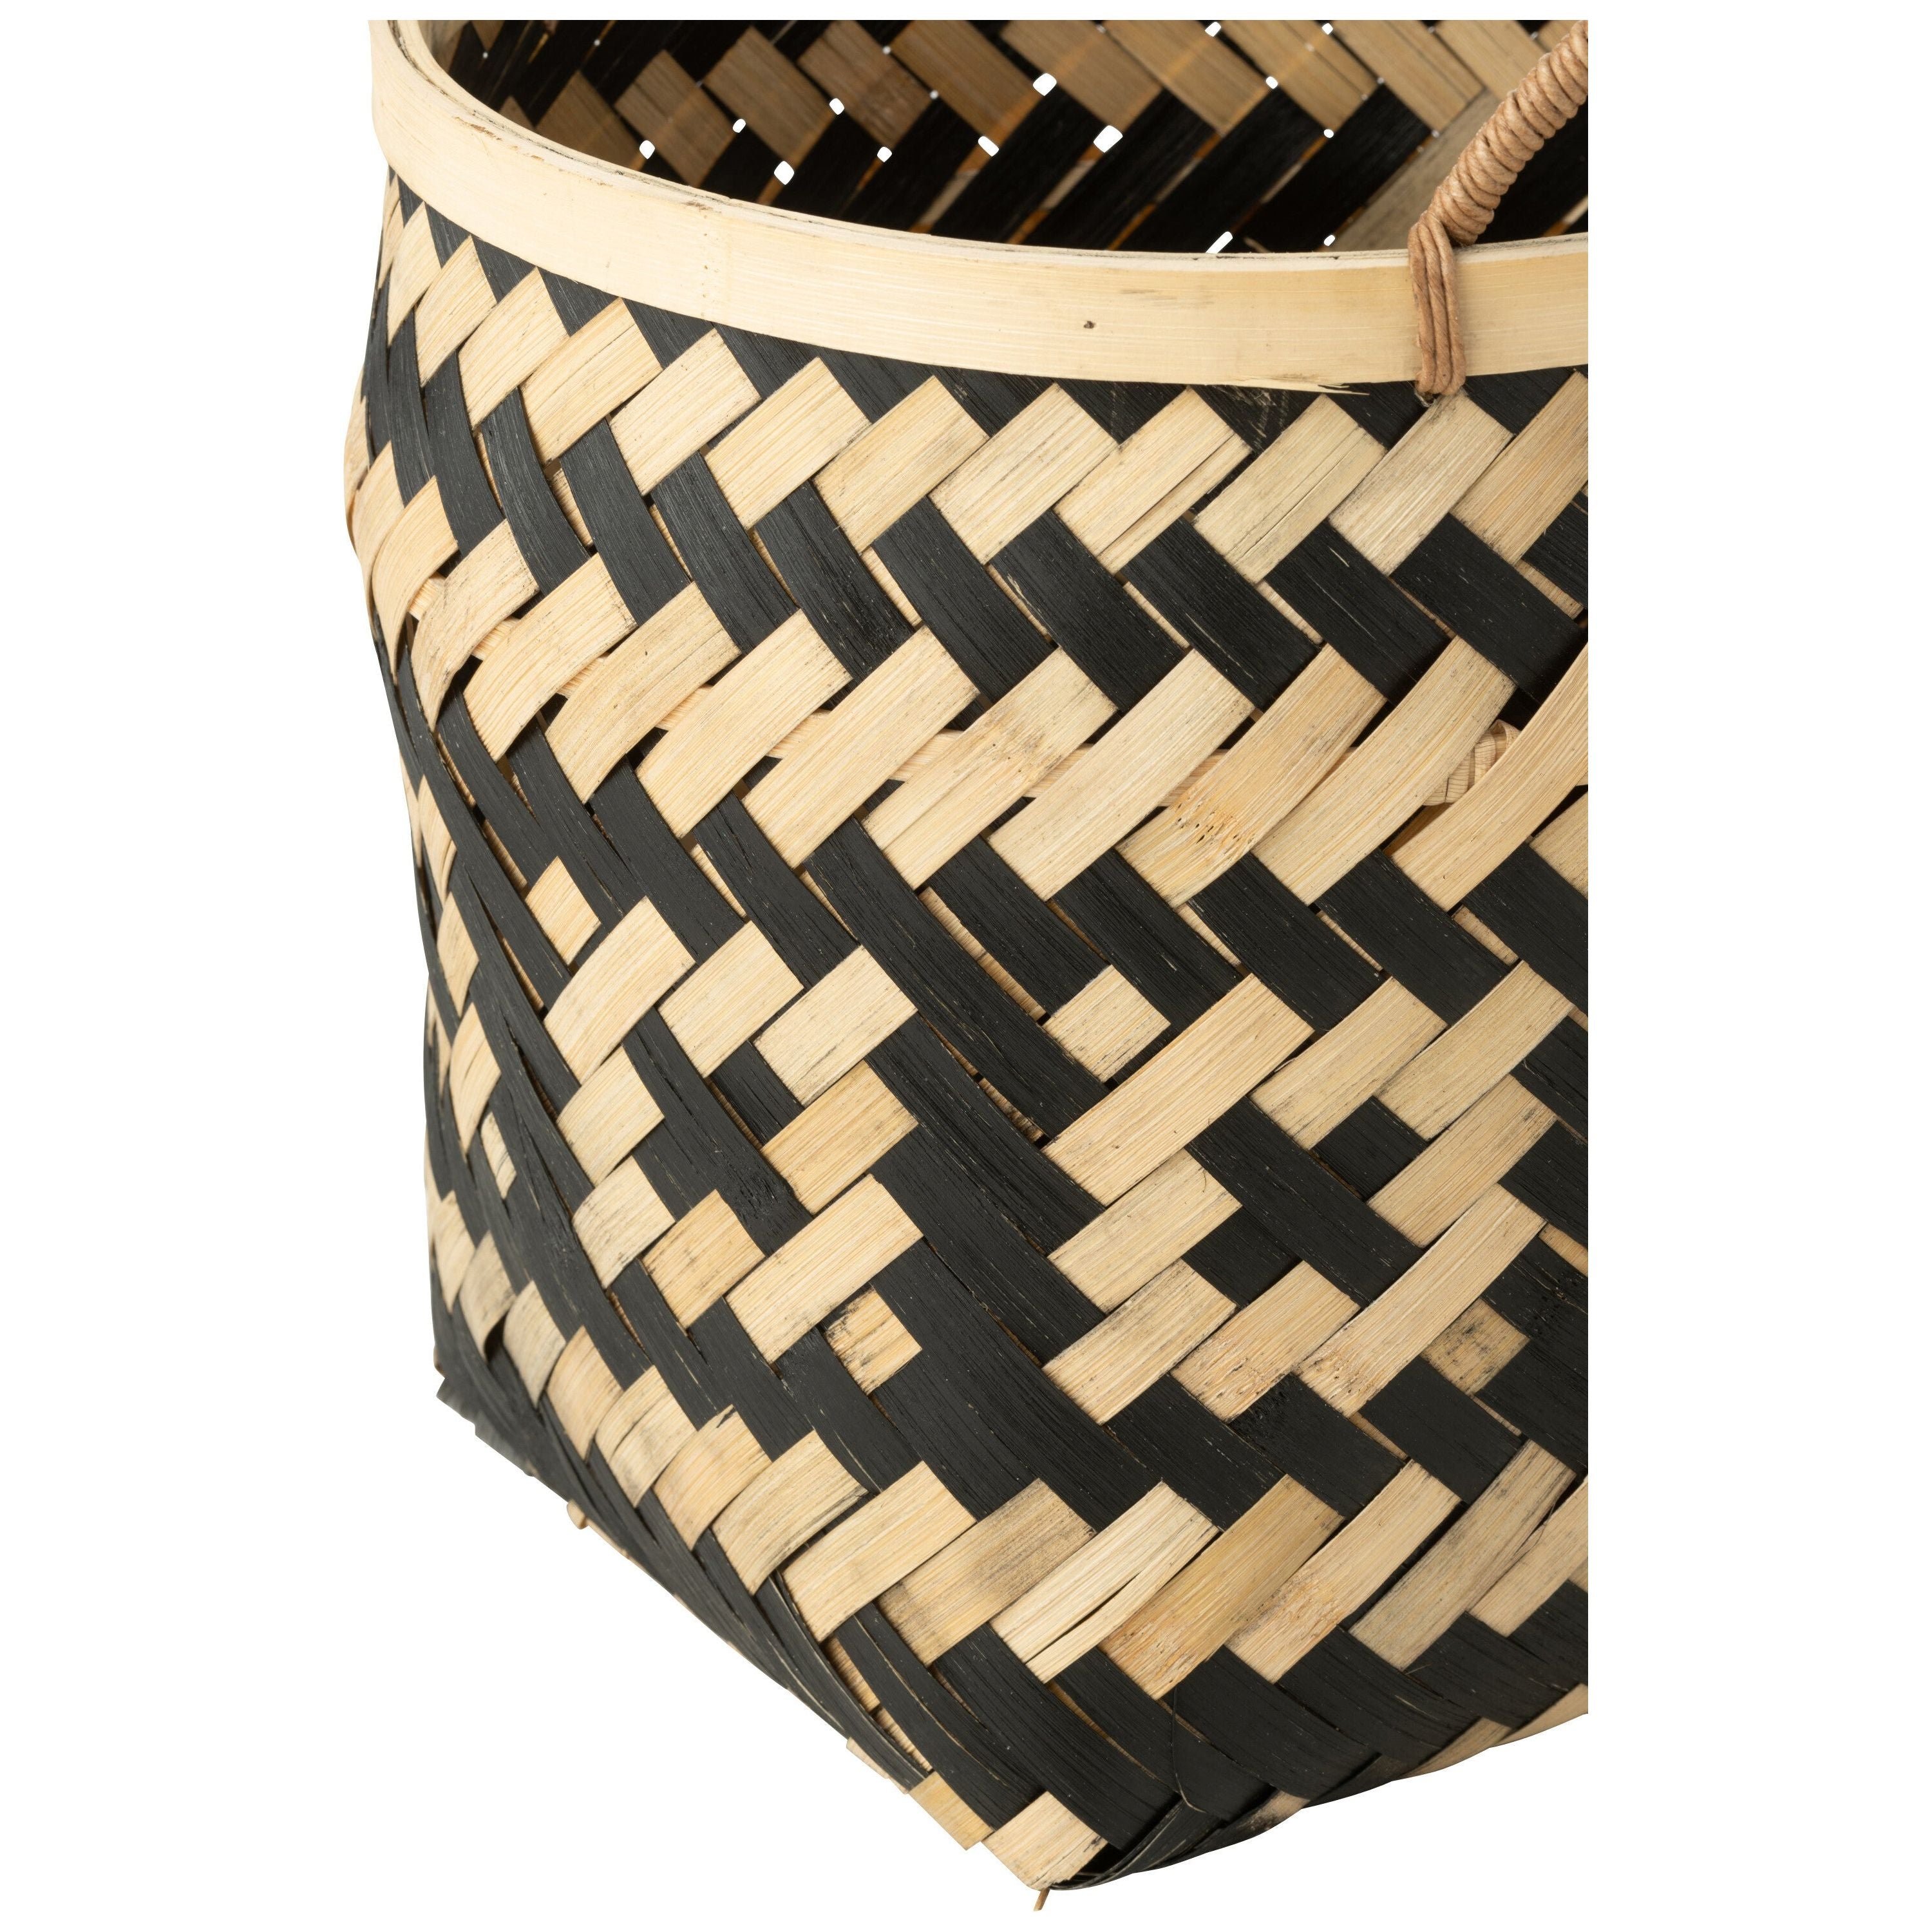 Basket Patterns Handles Bamboo Natural/black